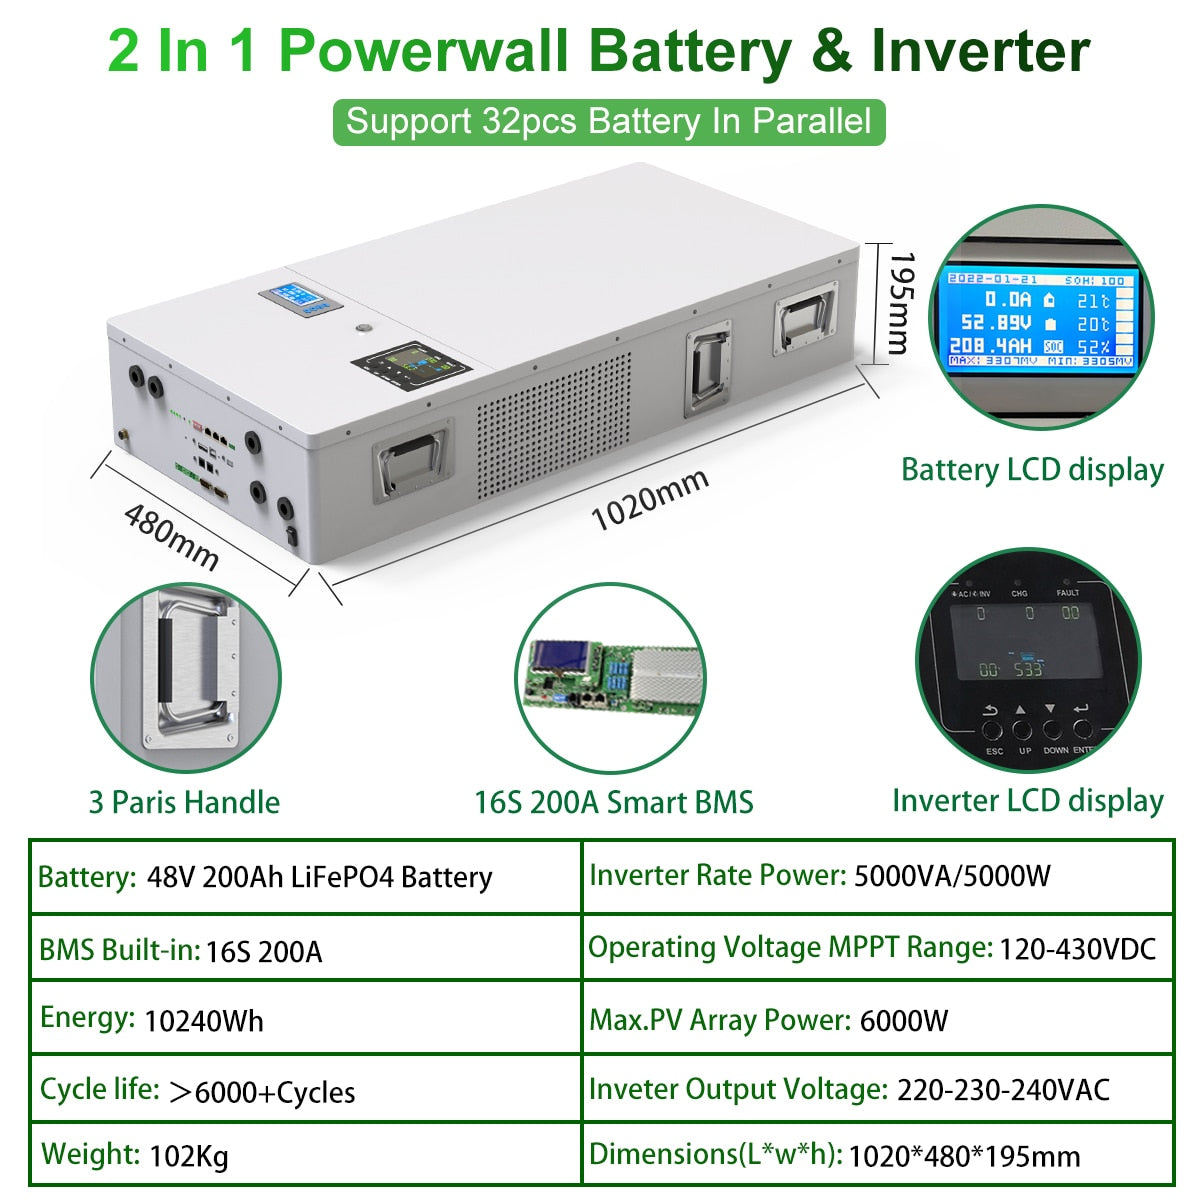 2 In 1 Powerwall Battery & Inverter Support 32p